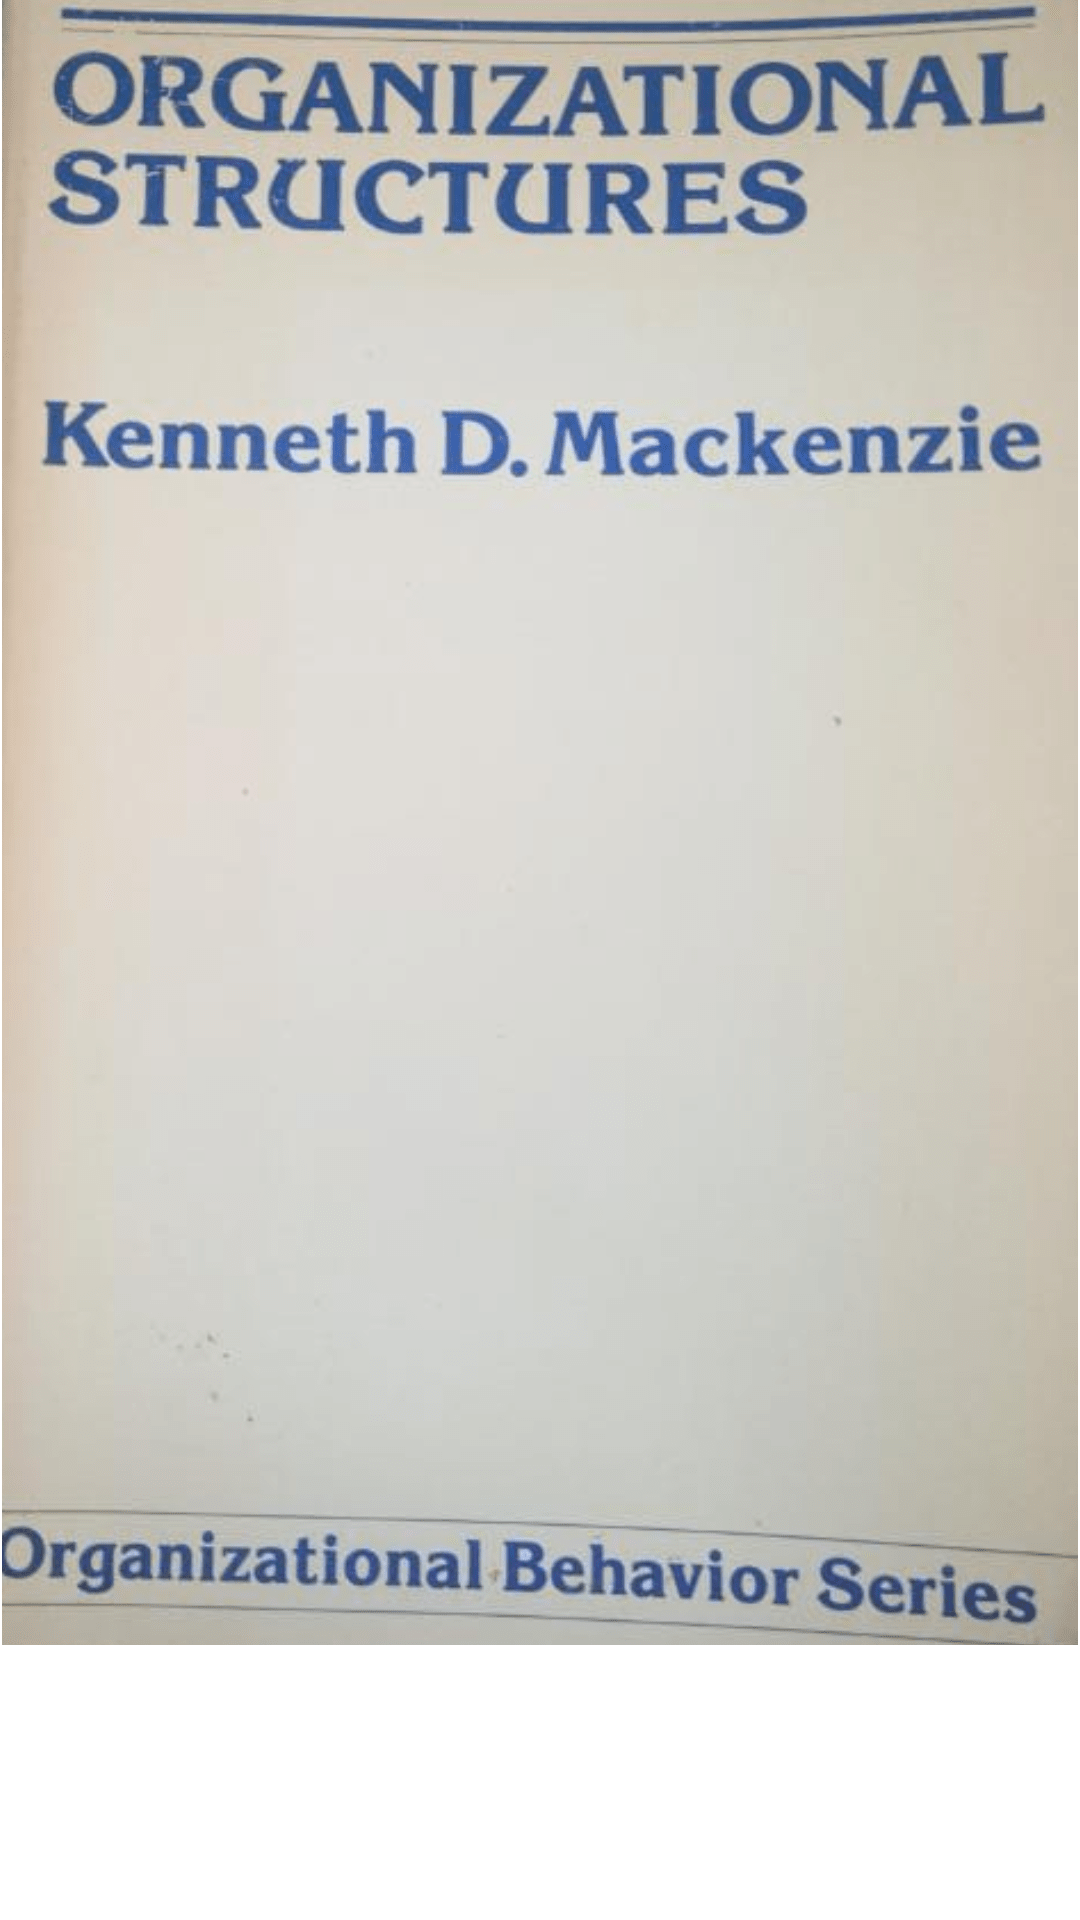 Organizational Structures by Kenneth D. Mackenzie